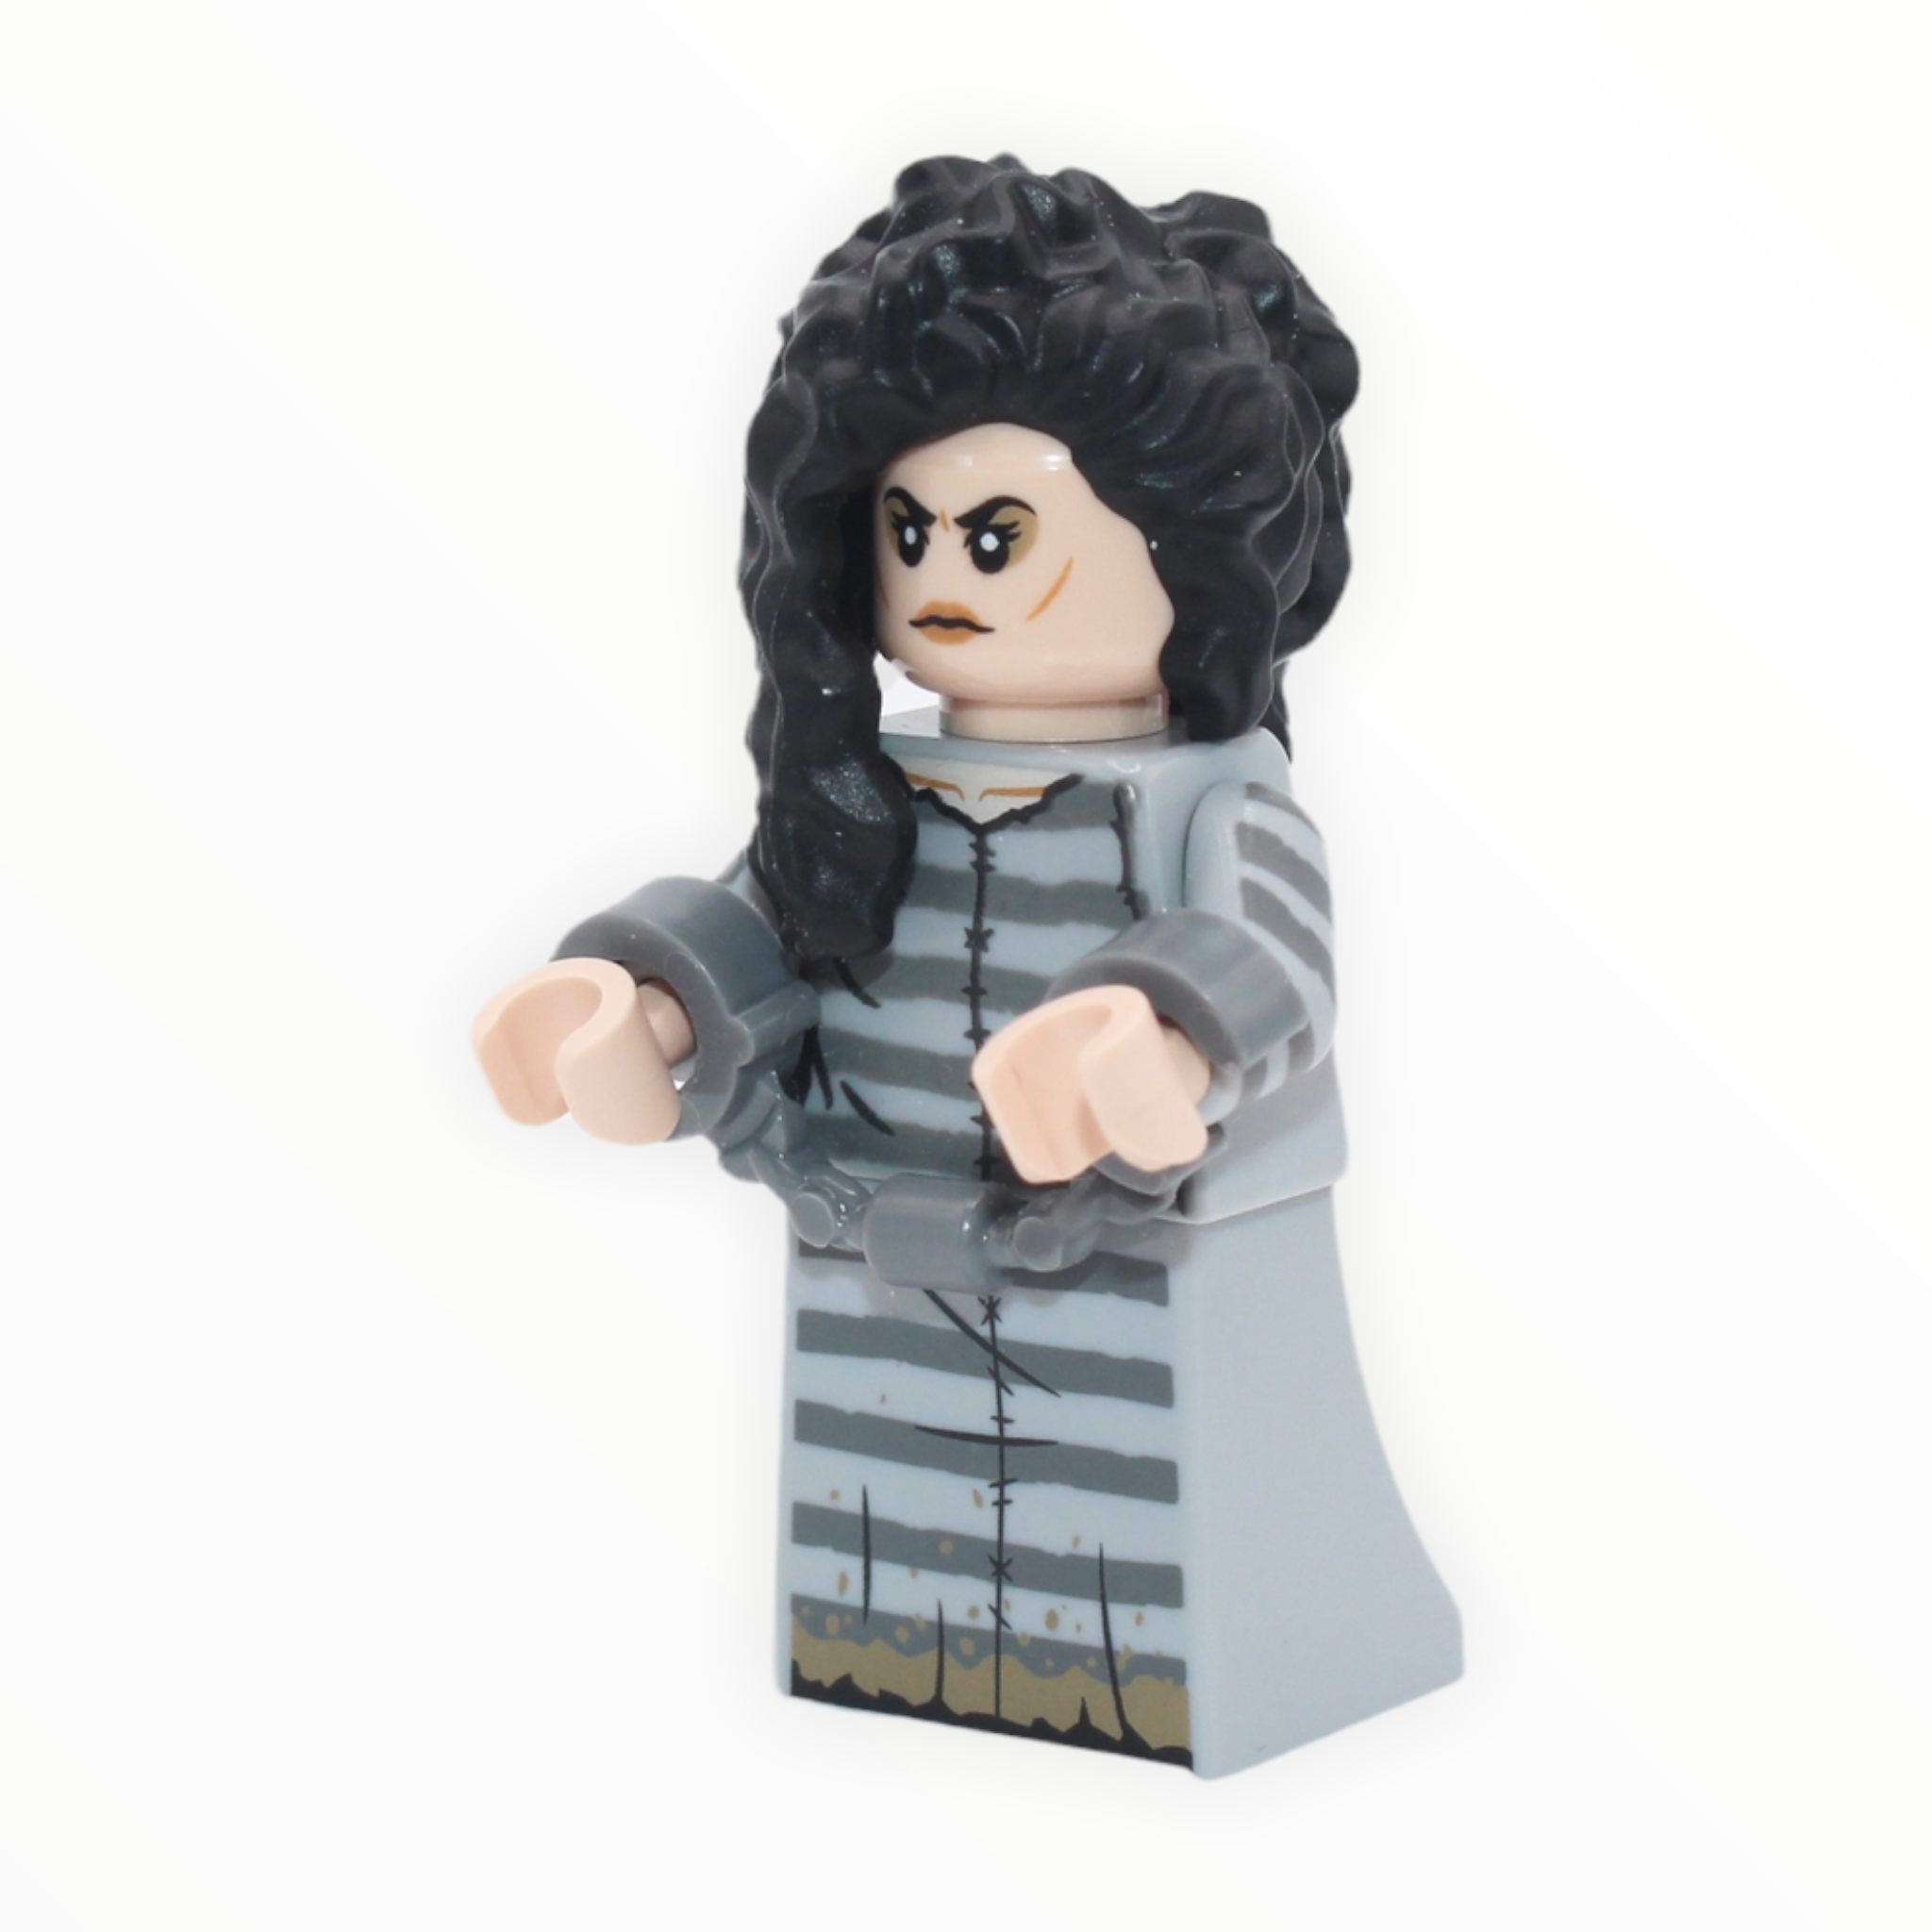 Harry Potter Series 2: Bellatrix Lestrange in Azkaban outfit